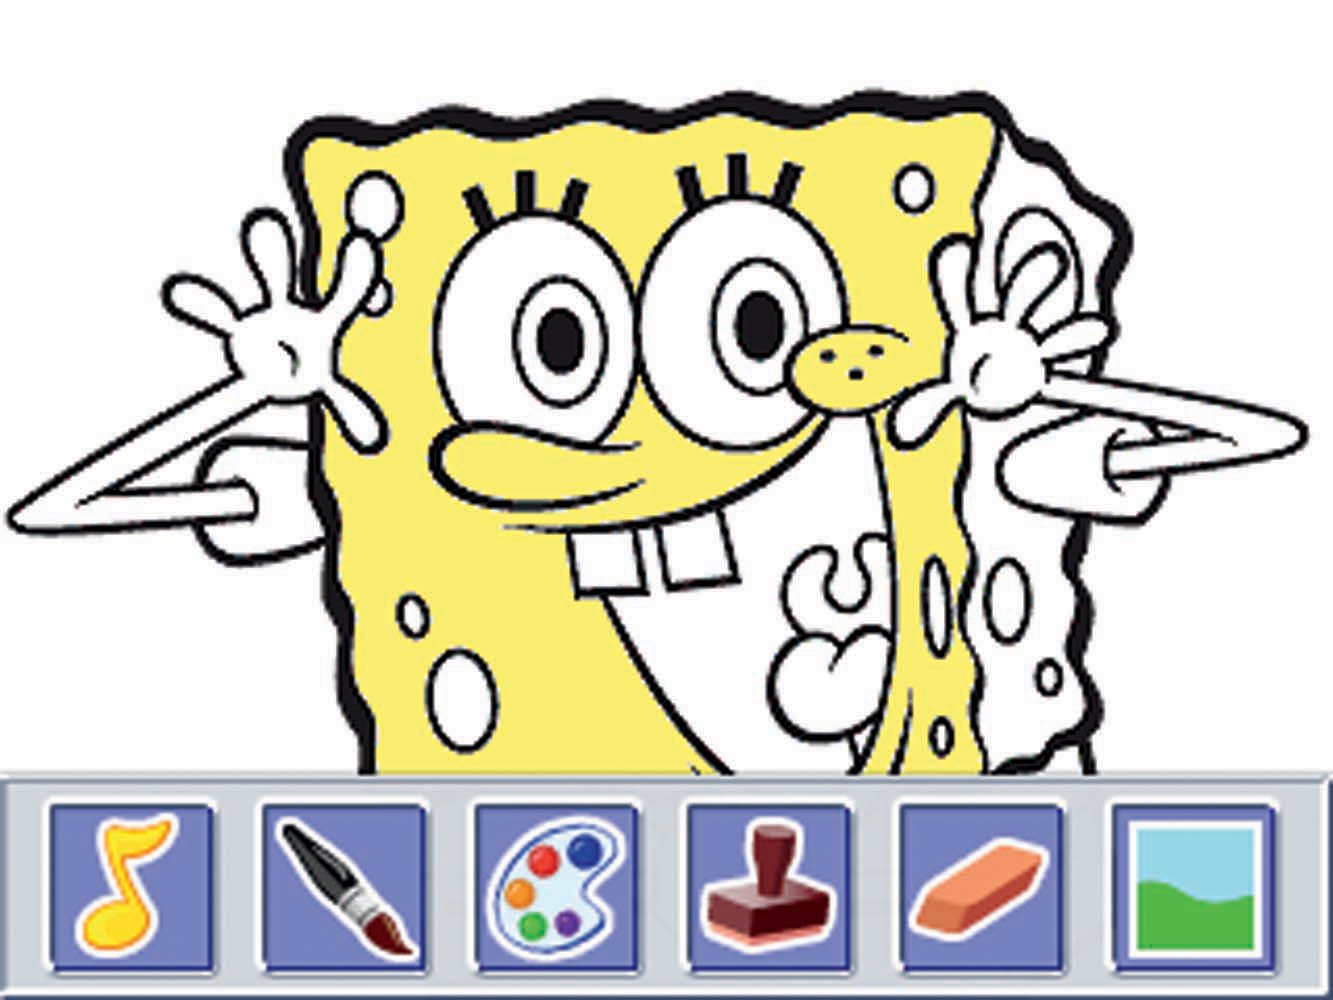 Fisher-Price iXL Learning System Software Spongebob Squarepants